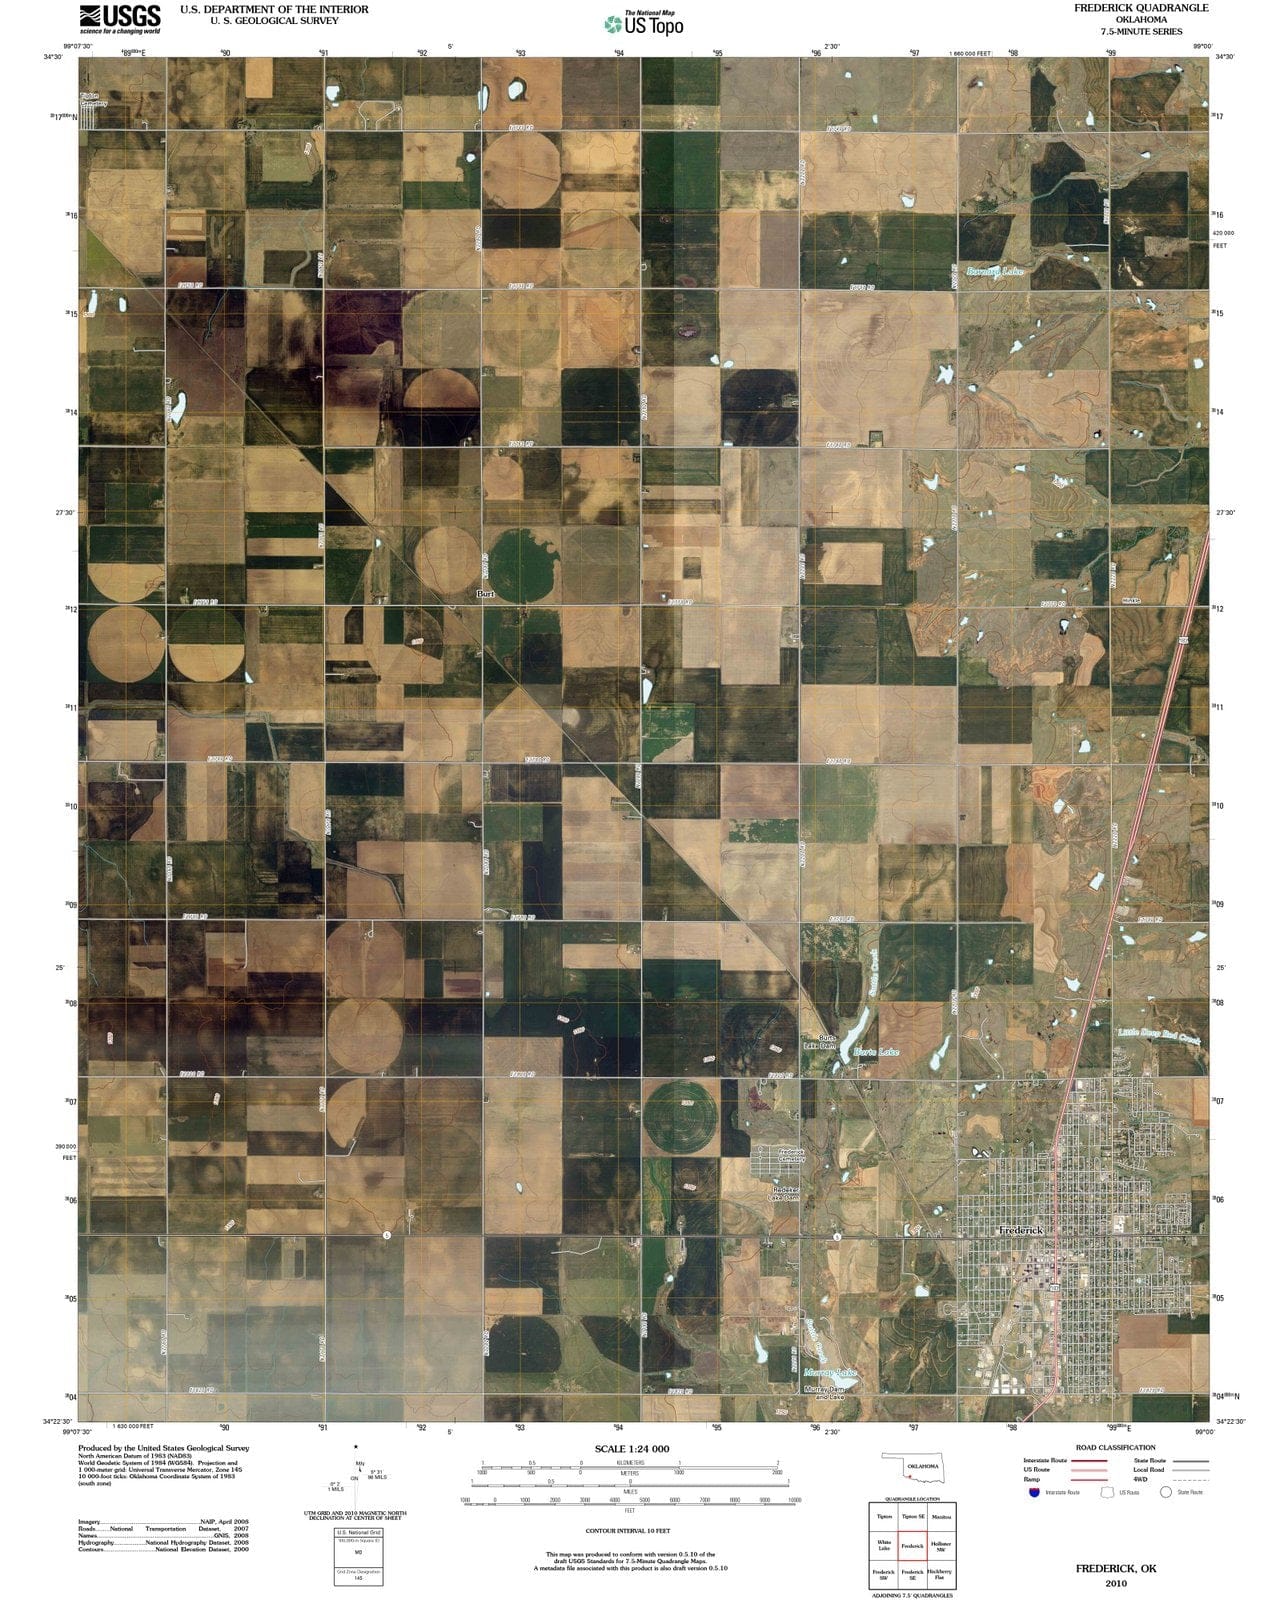 2010 Frederick, OK - Oklahoma - USGS Topographic Map